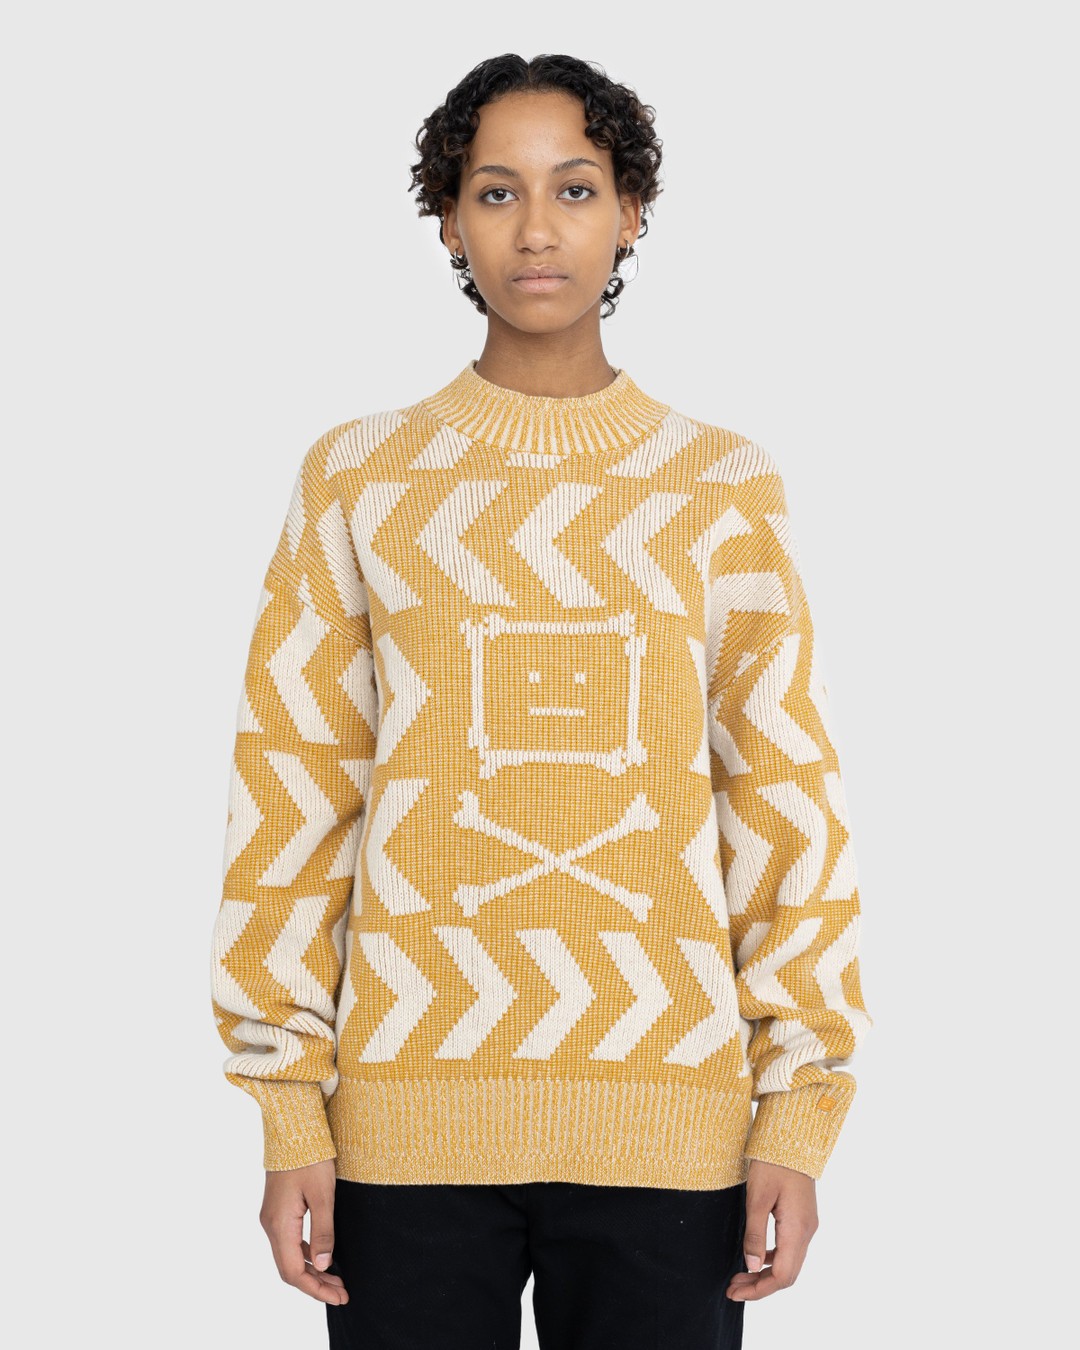 Acne Studios – Face Crossbones and Arrow Crewneck Sweater Yellow - Crewnecks - Yellow - Image 2